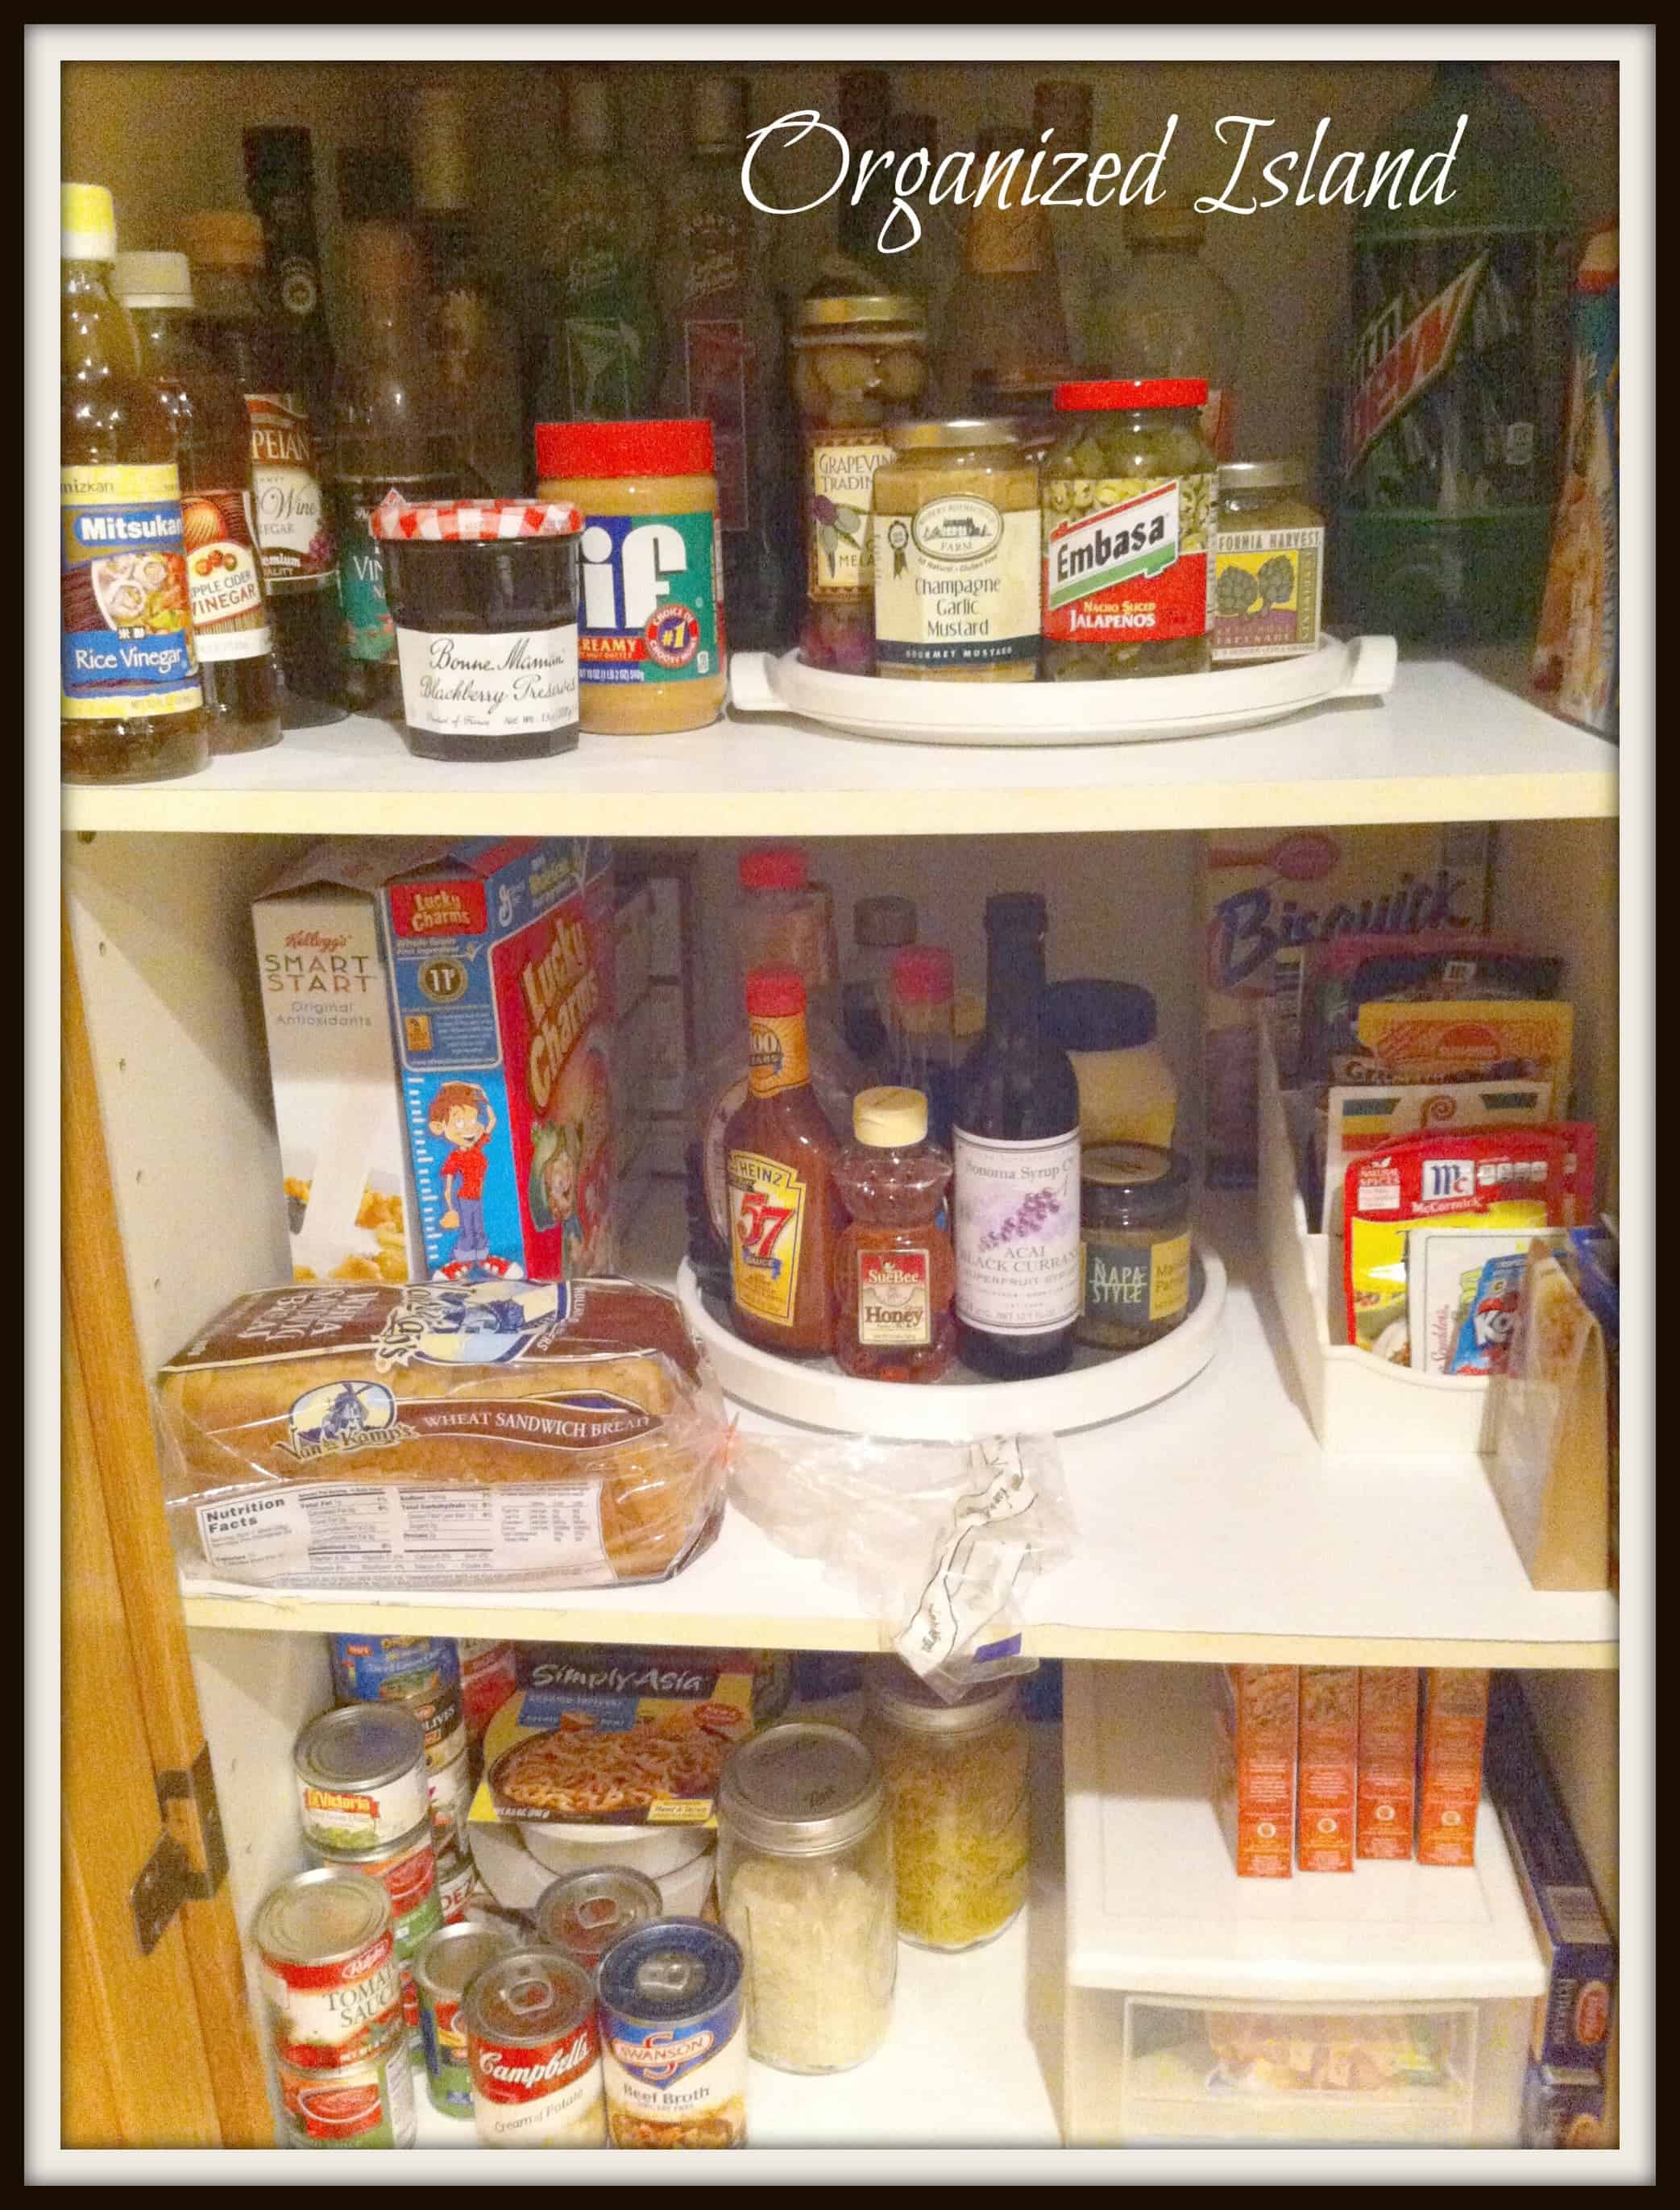 https://www.organizedisland.com/wp-content/uploads/2013/02/Organized-Pantry-organizedhome-kitchen-.jpg.jpg